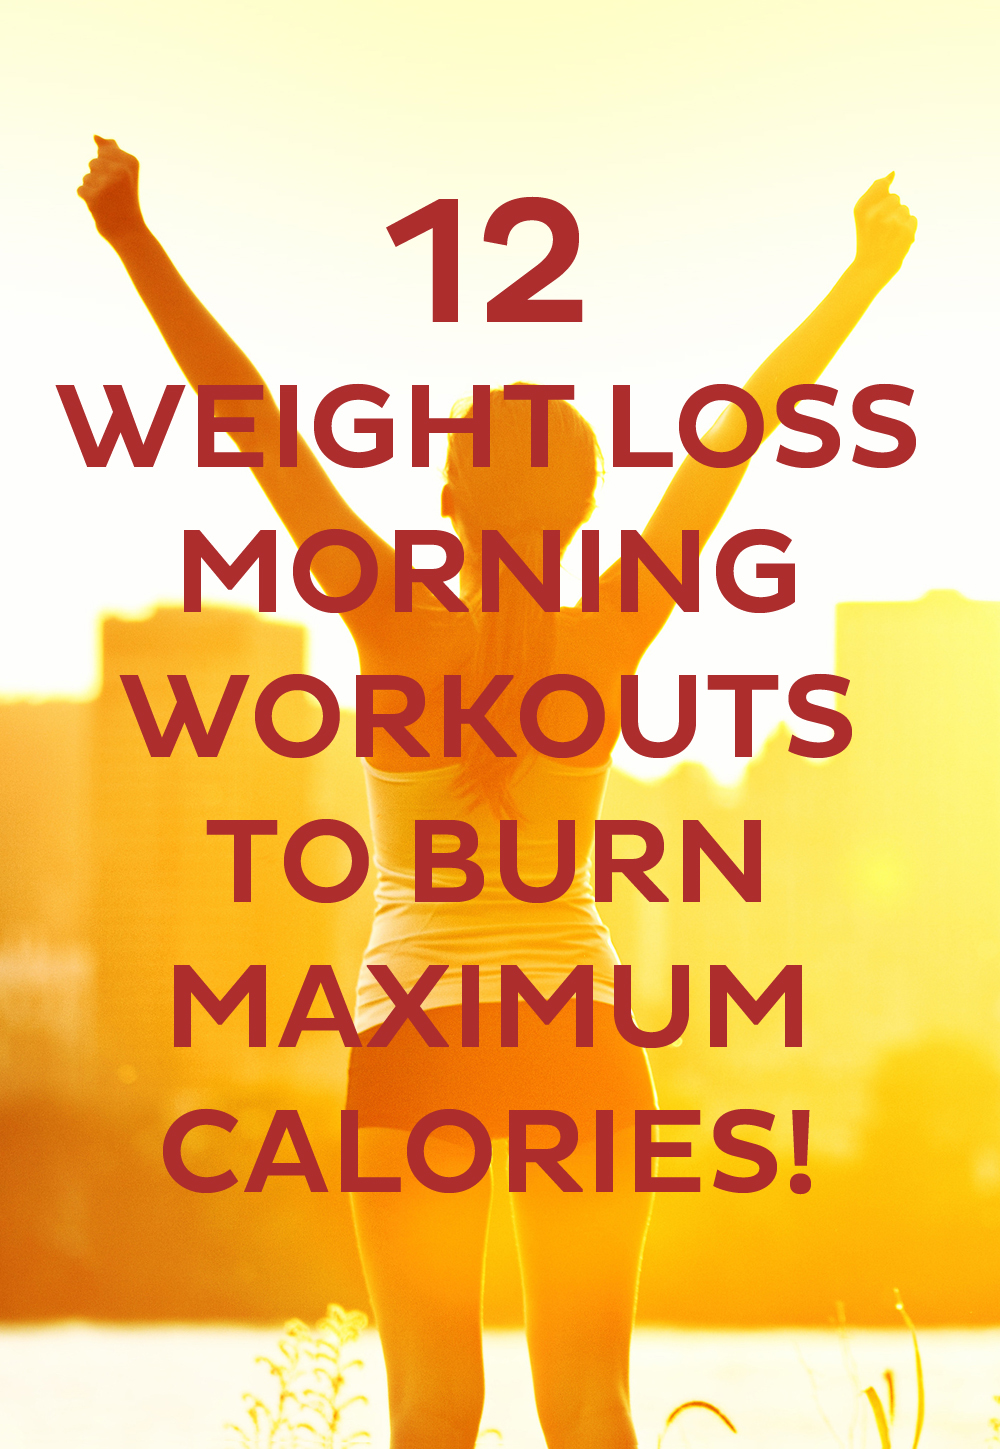 12 Weight Loss Morning Workouts To Burn Maximum Calories!